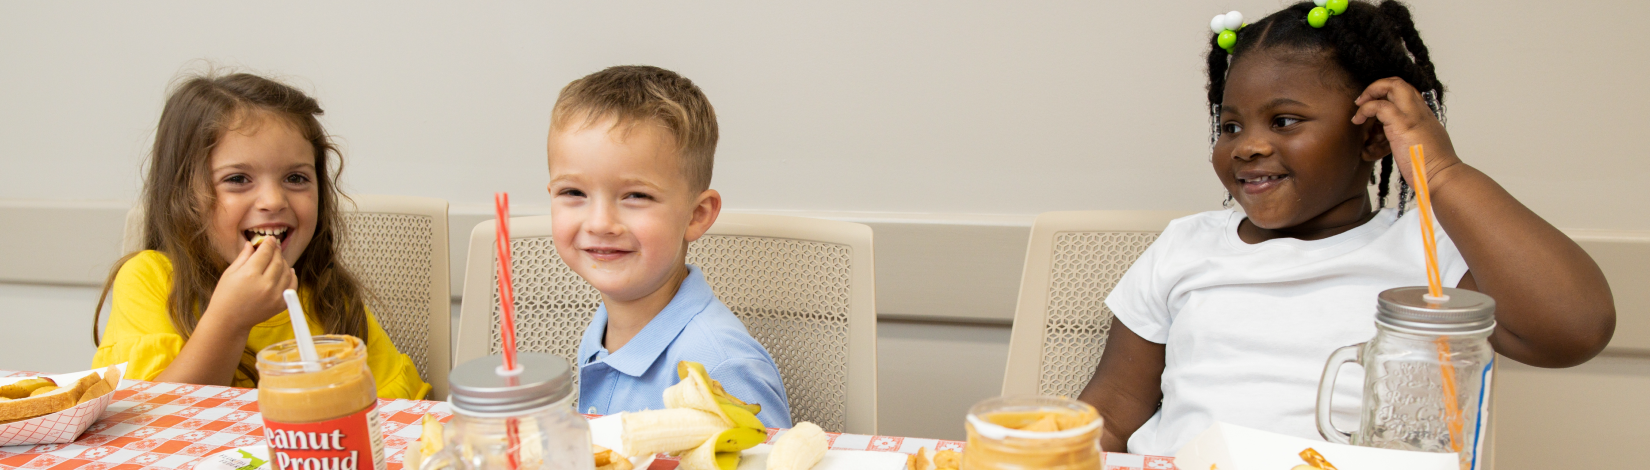 Children enjoy healthy snacks of banana slices and peanut butter treats